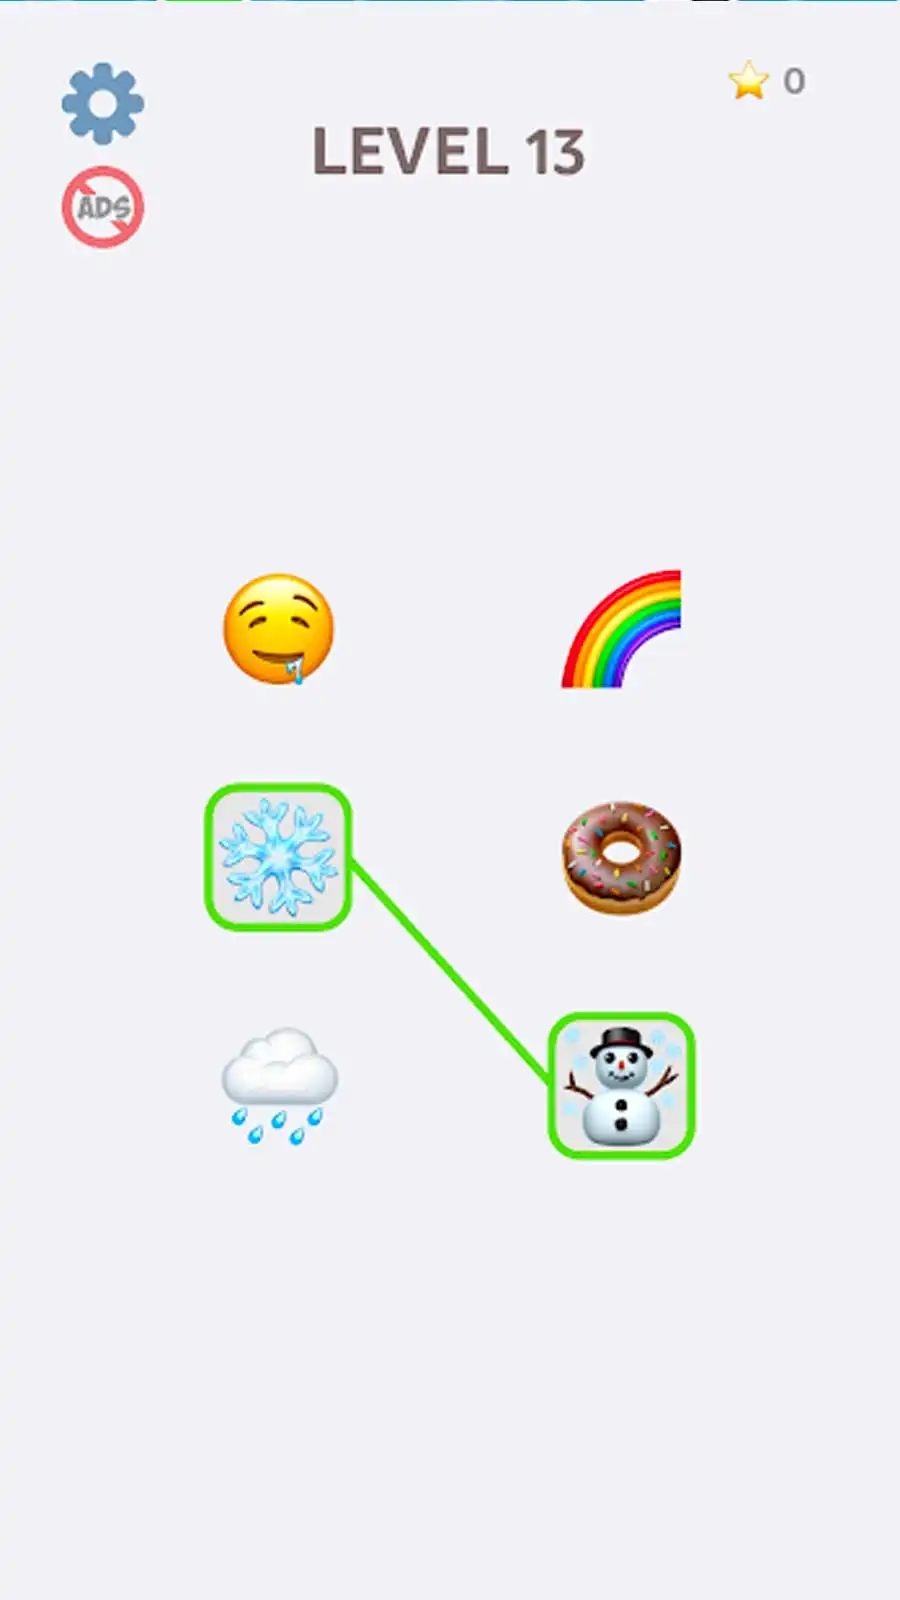 Emoji Game Screen Shot 0